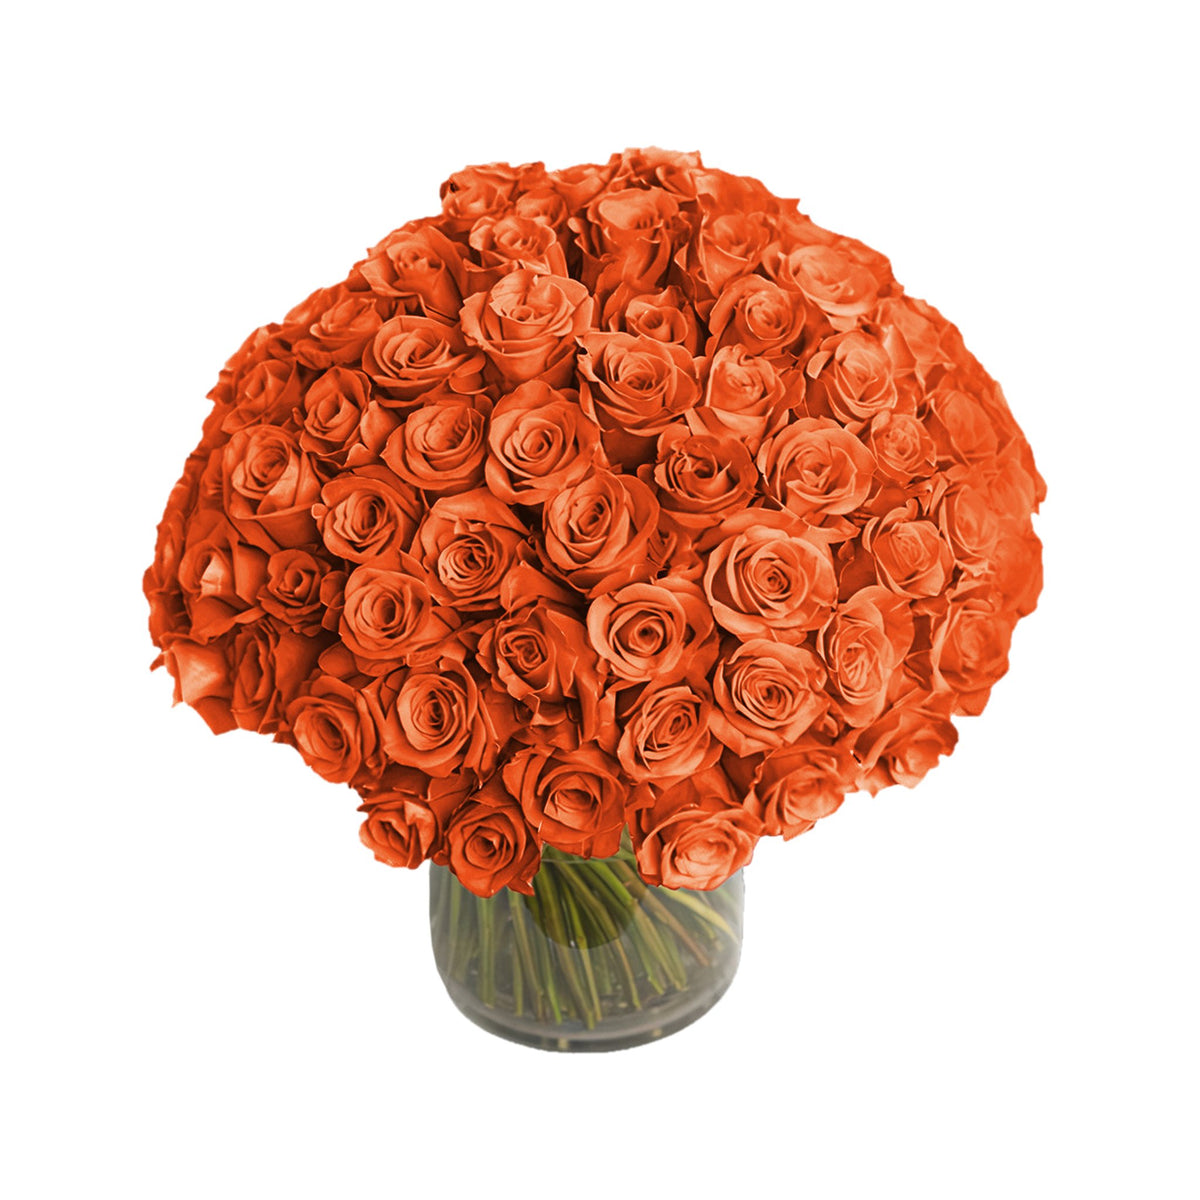 Queens Flower Delivery - Fresh Roses in a Crystal Vase | Orange - 100 Roses